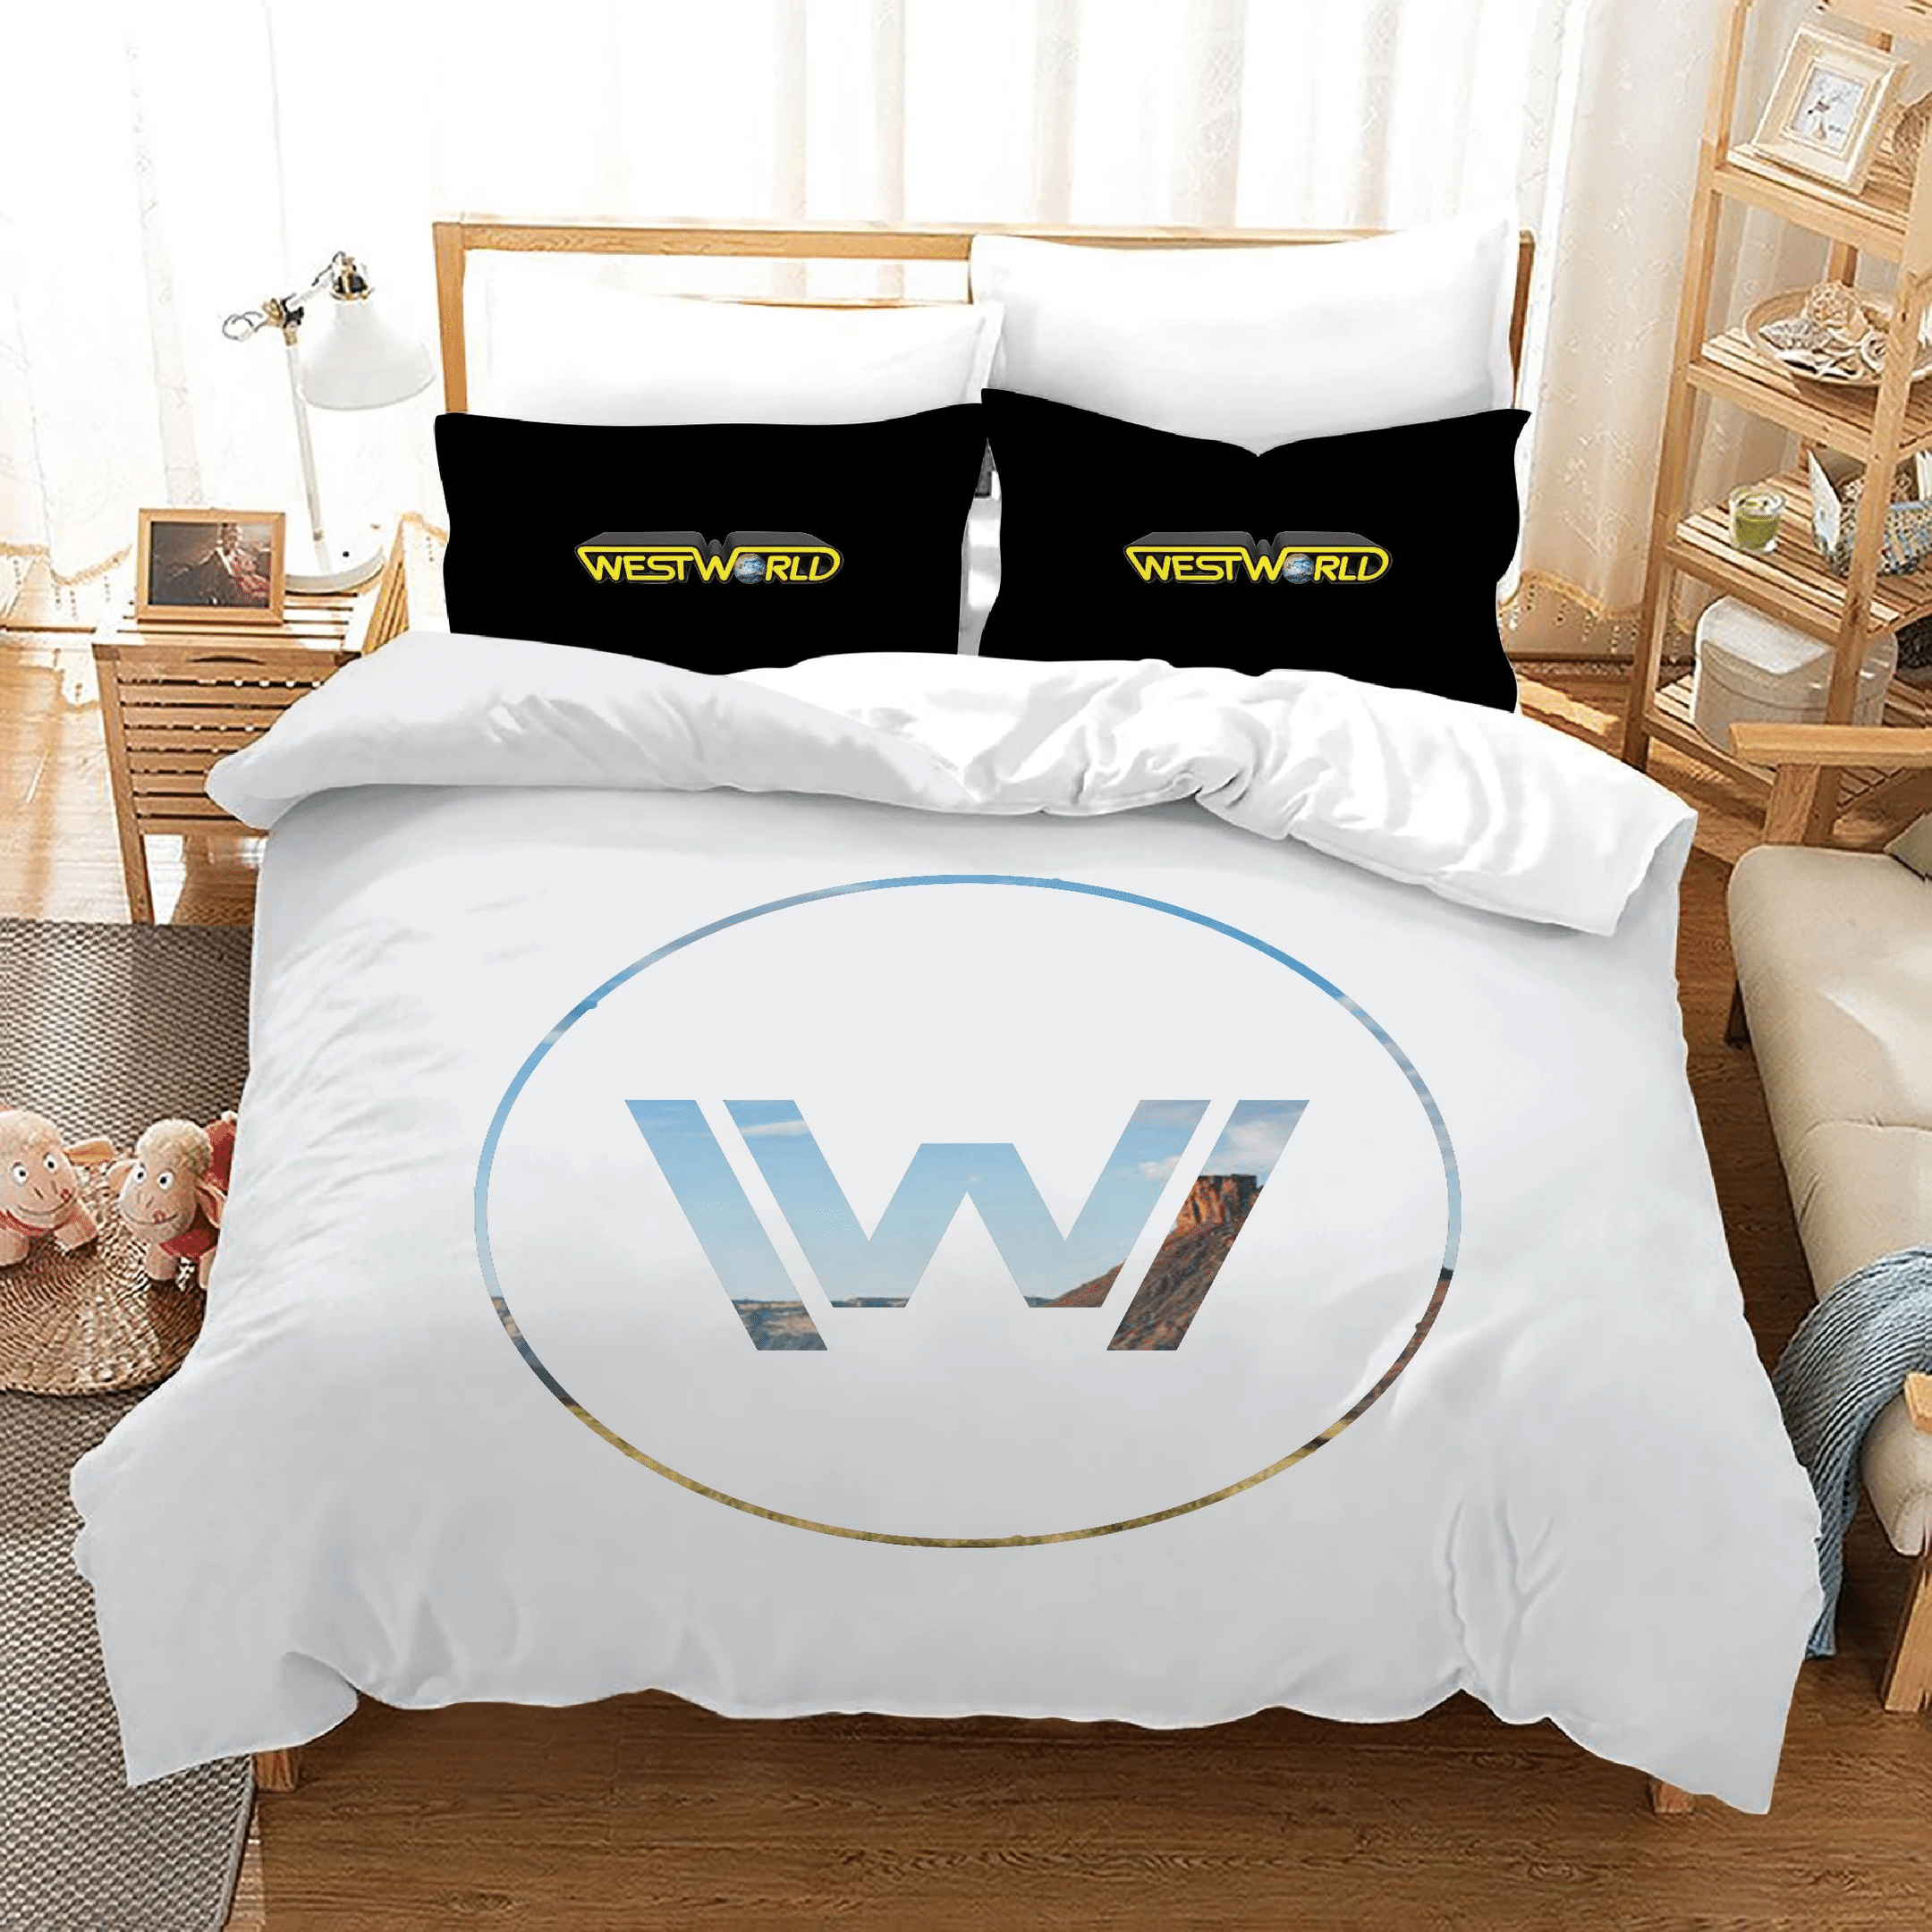 Westworld 10 Duvet Cover Pillowcase Bedding Sets Home Bedroom Decor